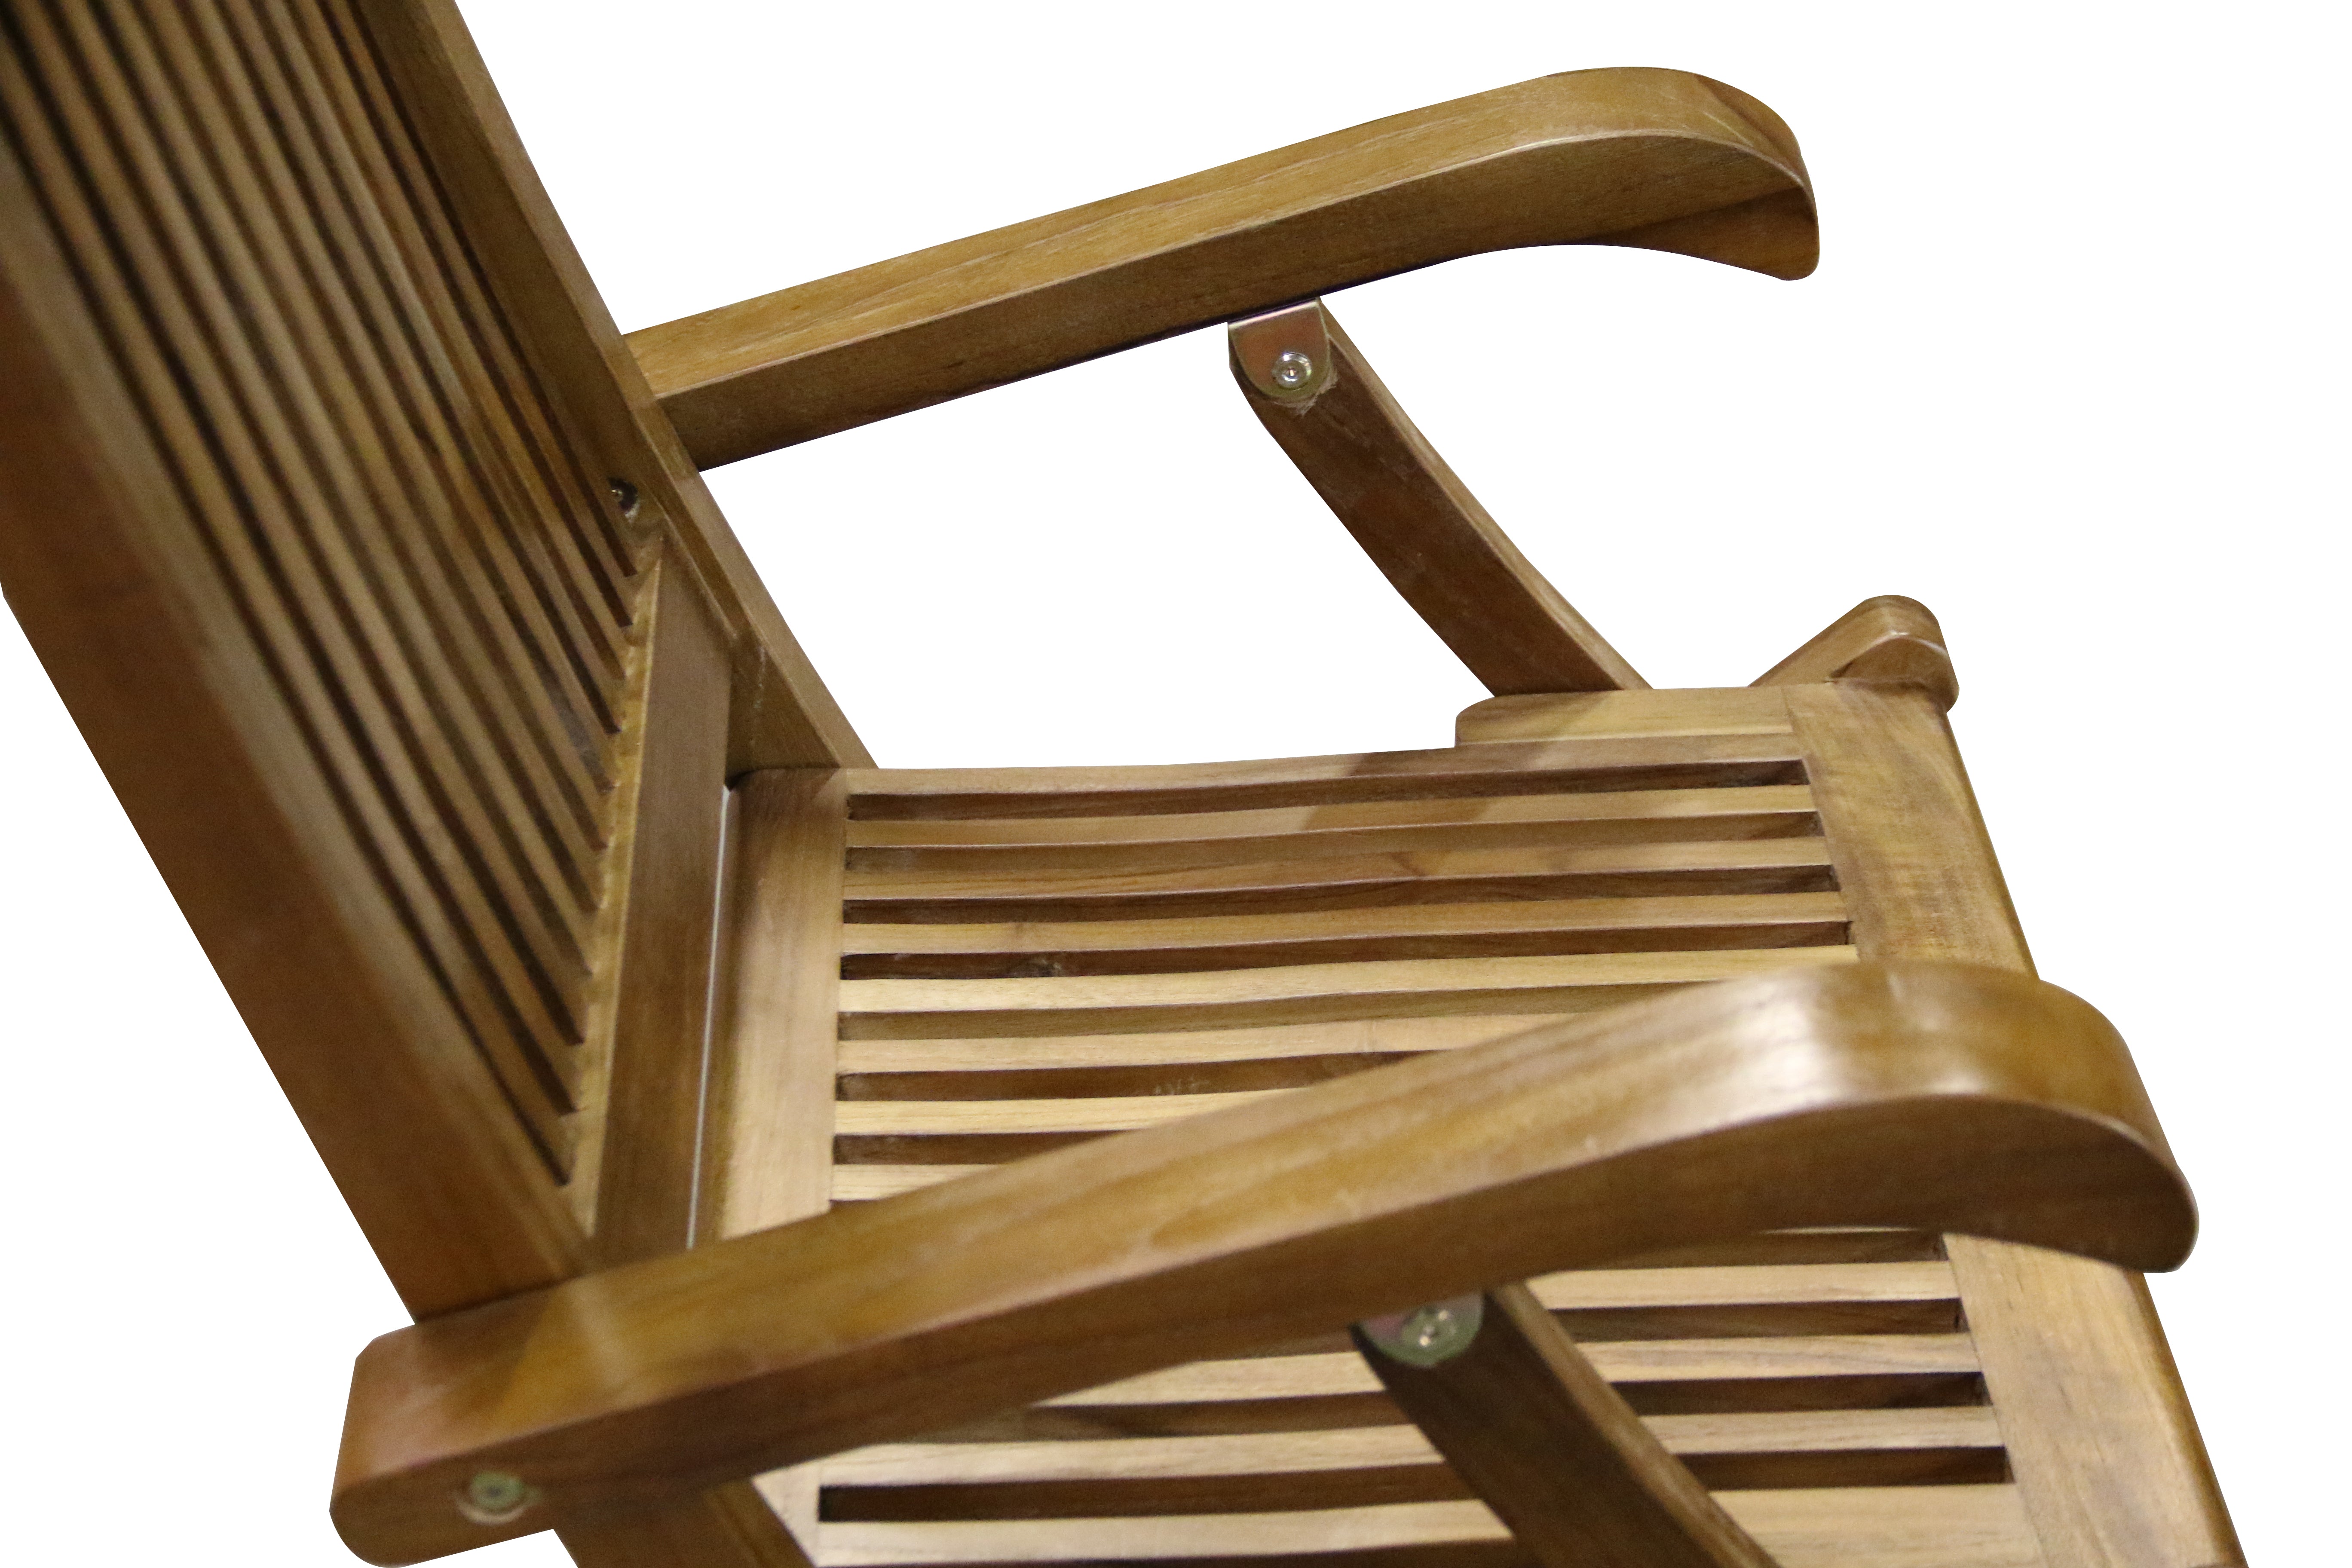 ALA TEAK 2 Piece Wood Indoor Outdoor Patio Garden Yard Folding Seat Arm Chair Set